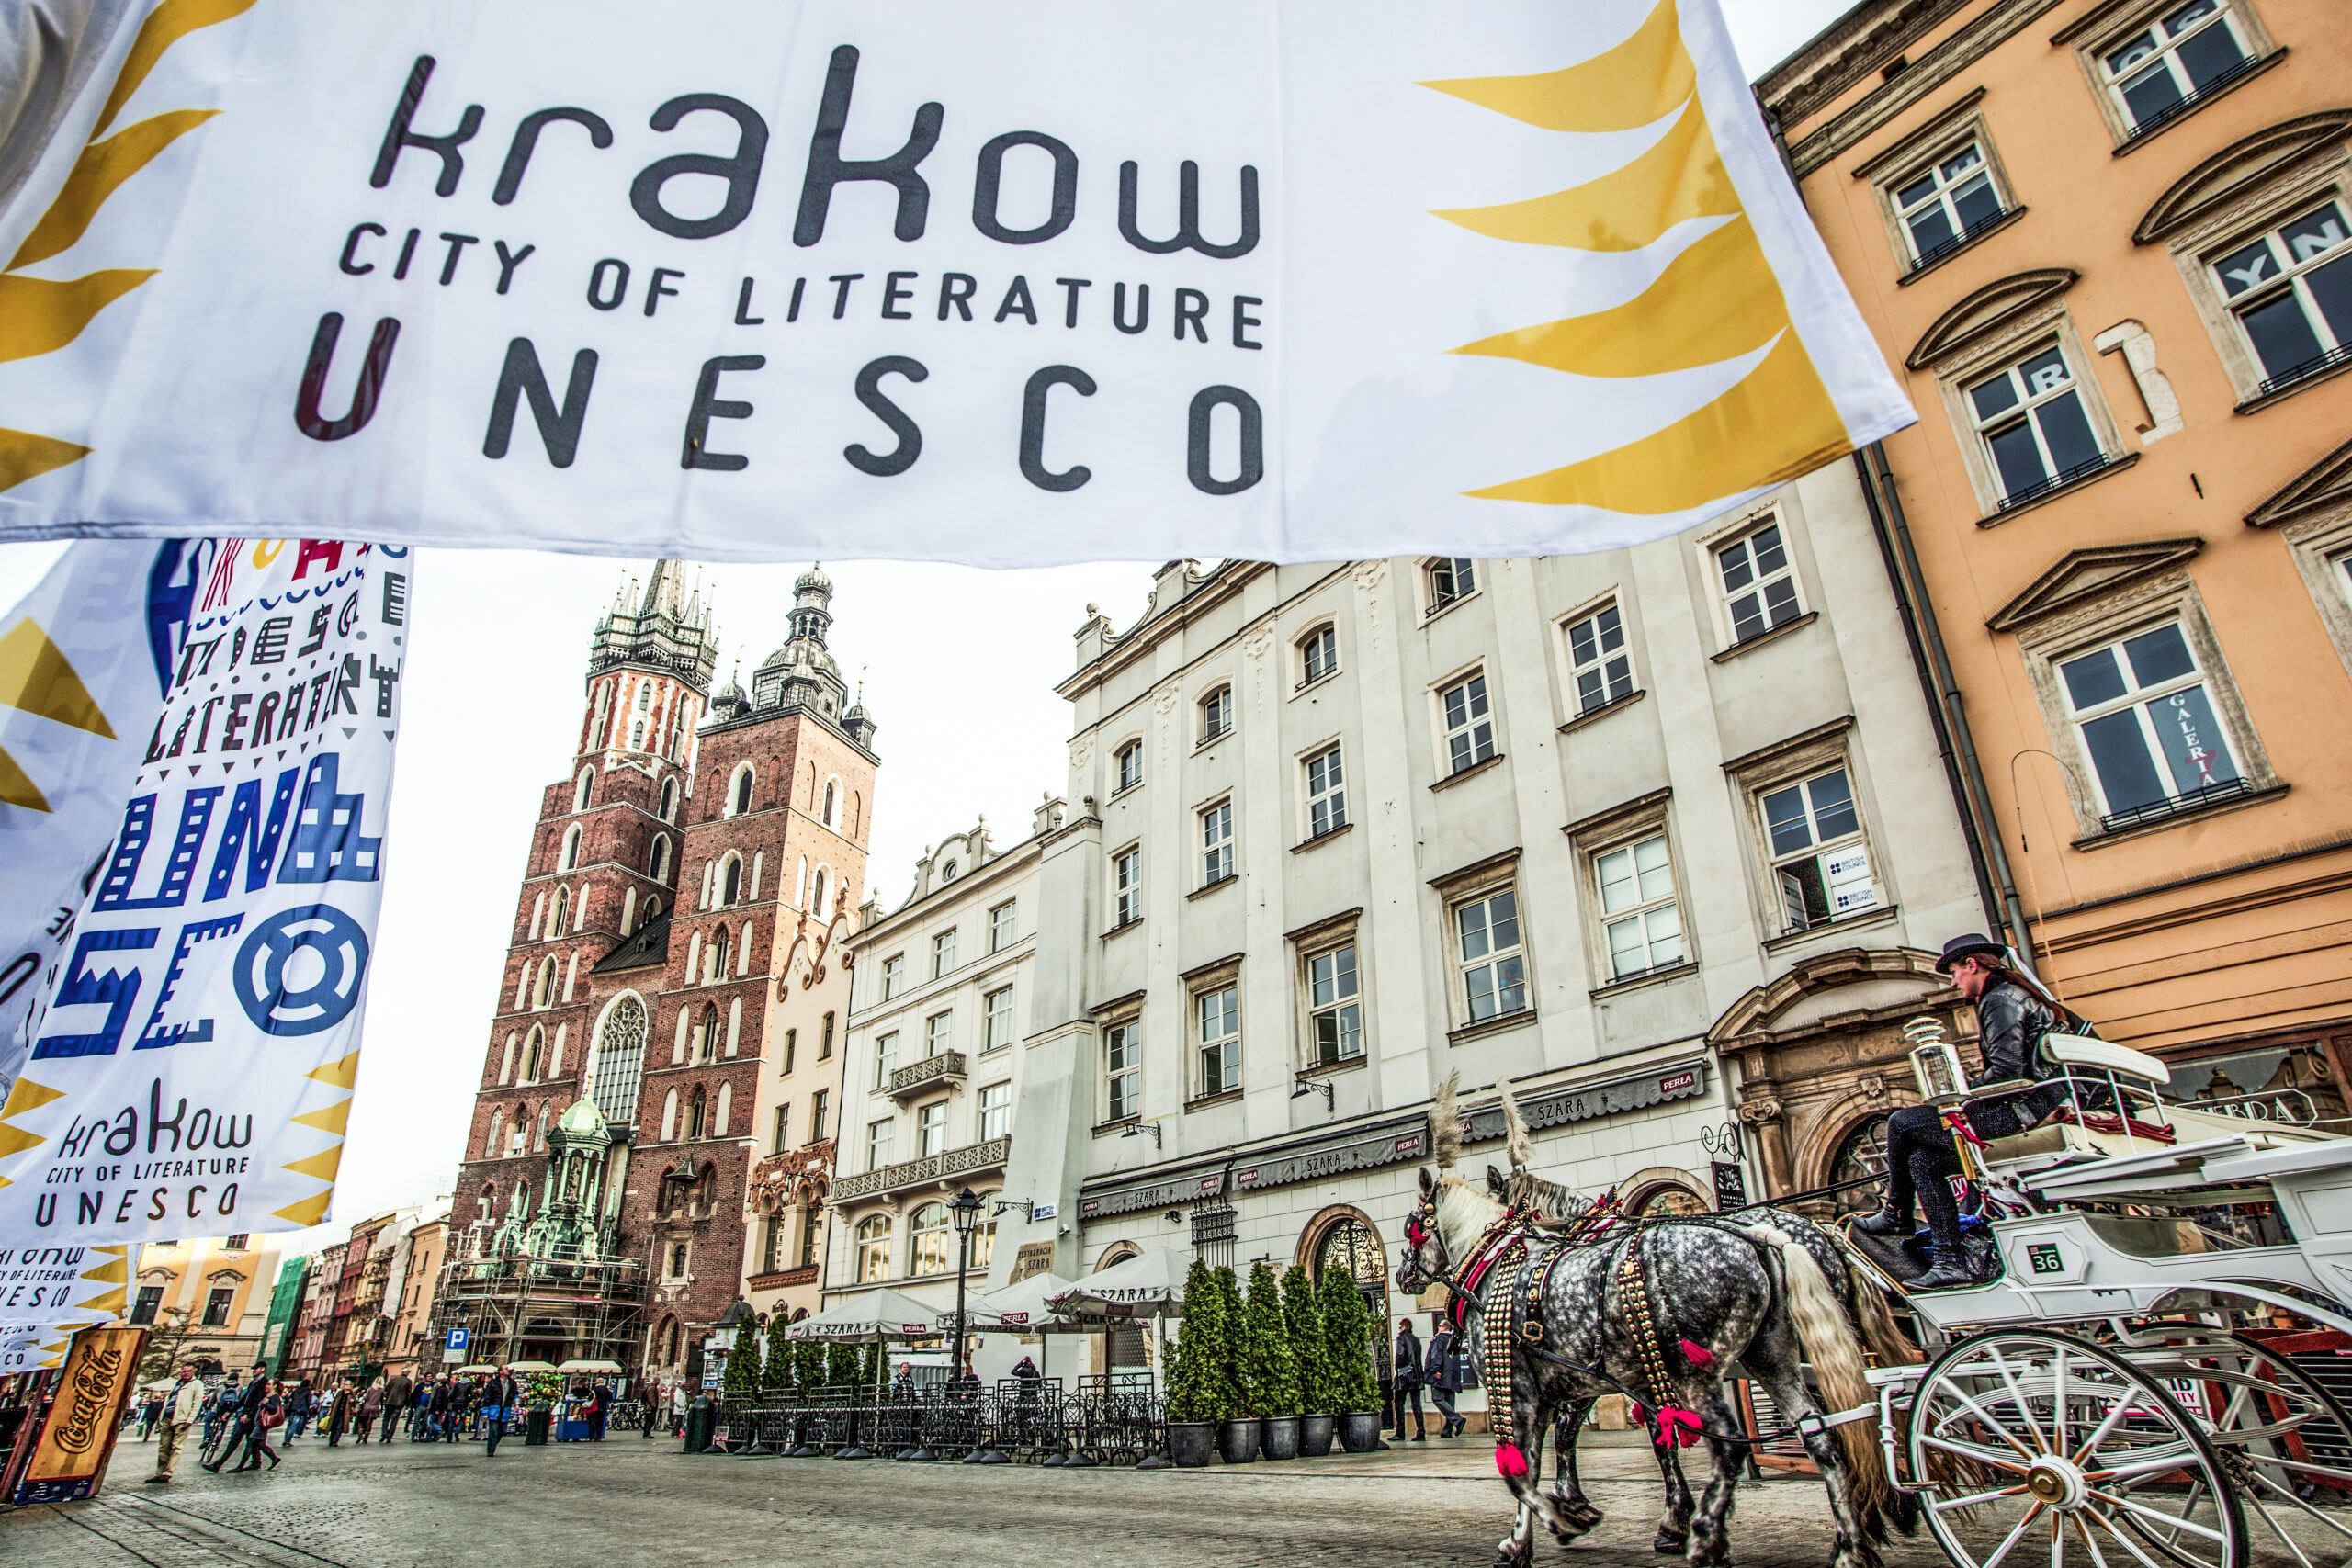 Krakow City of Literature